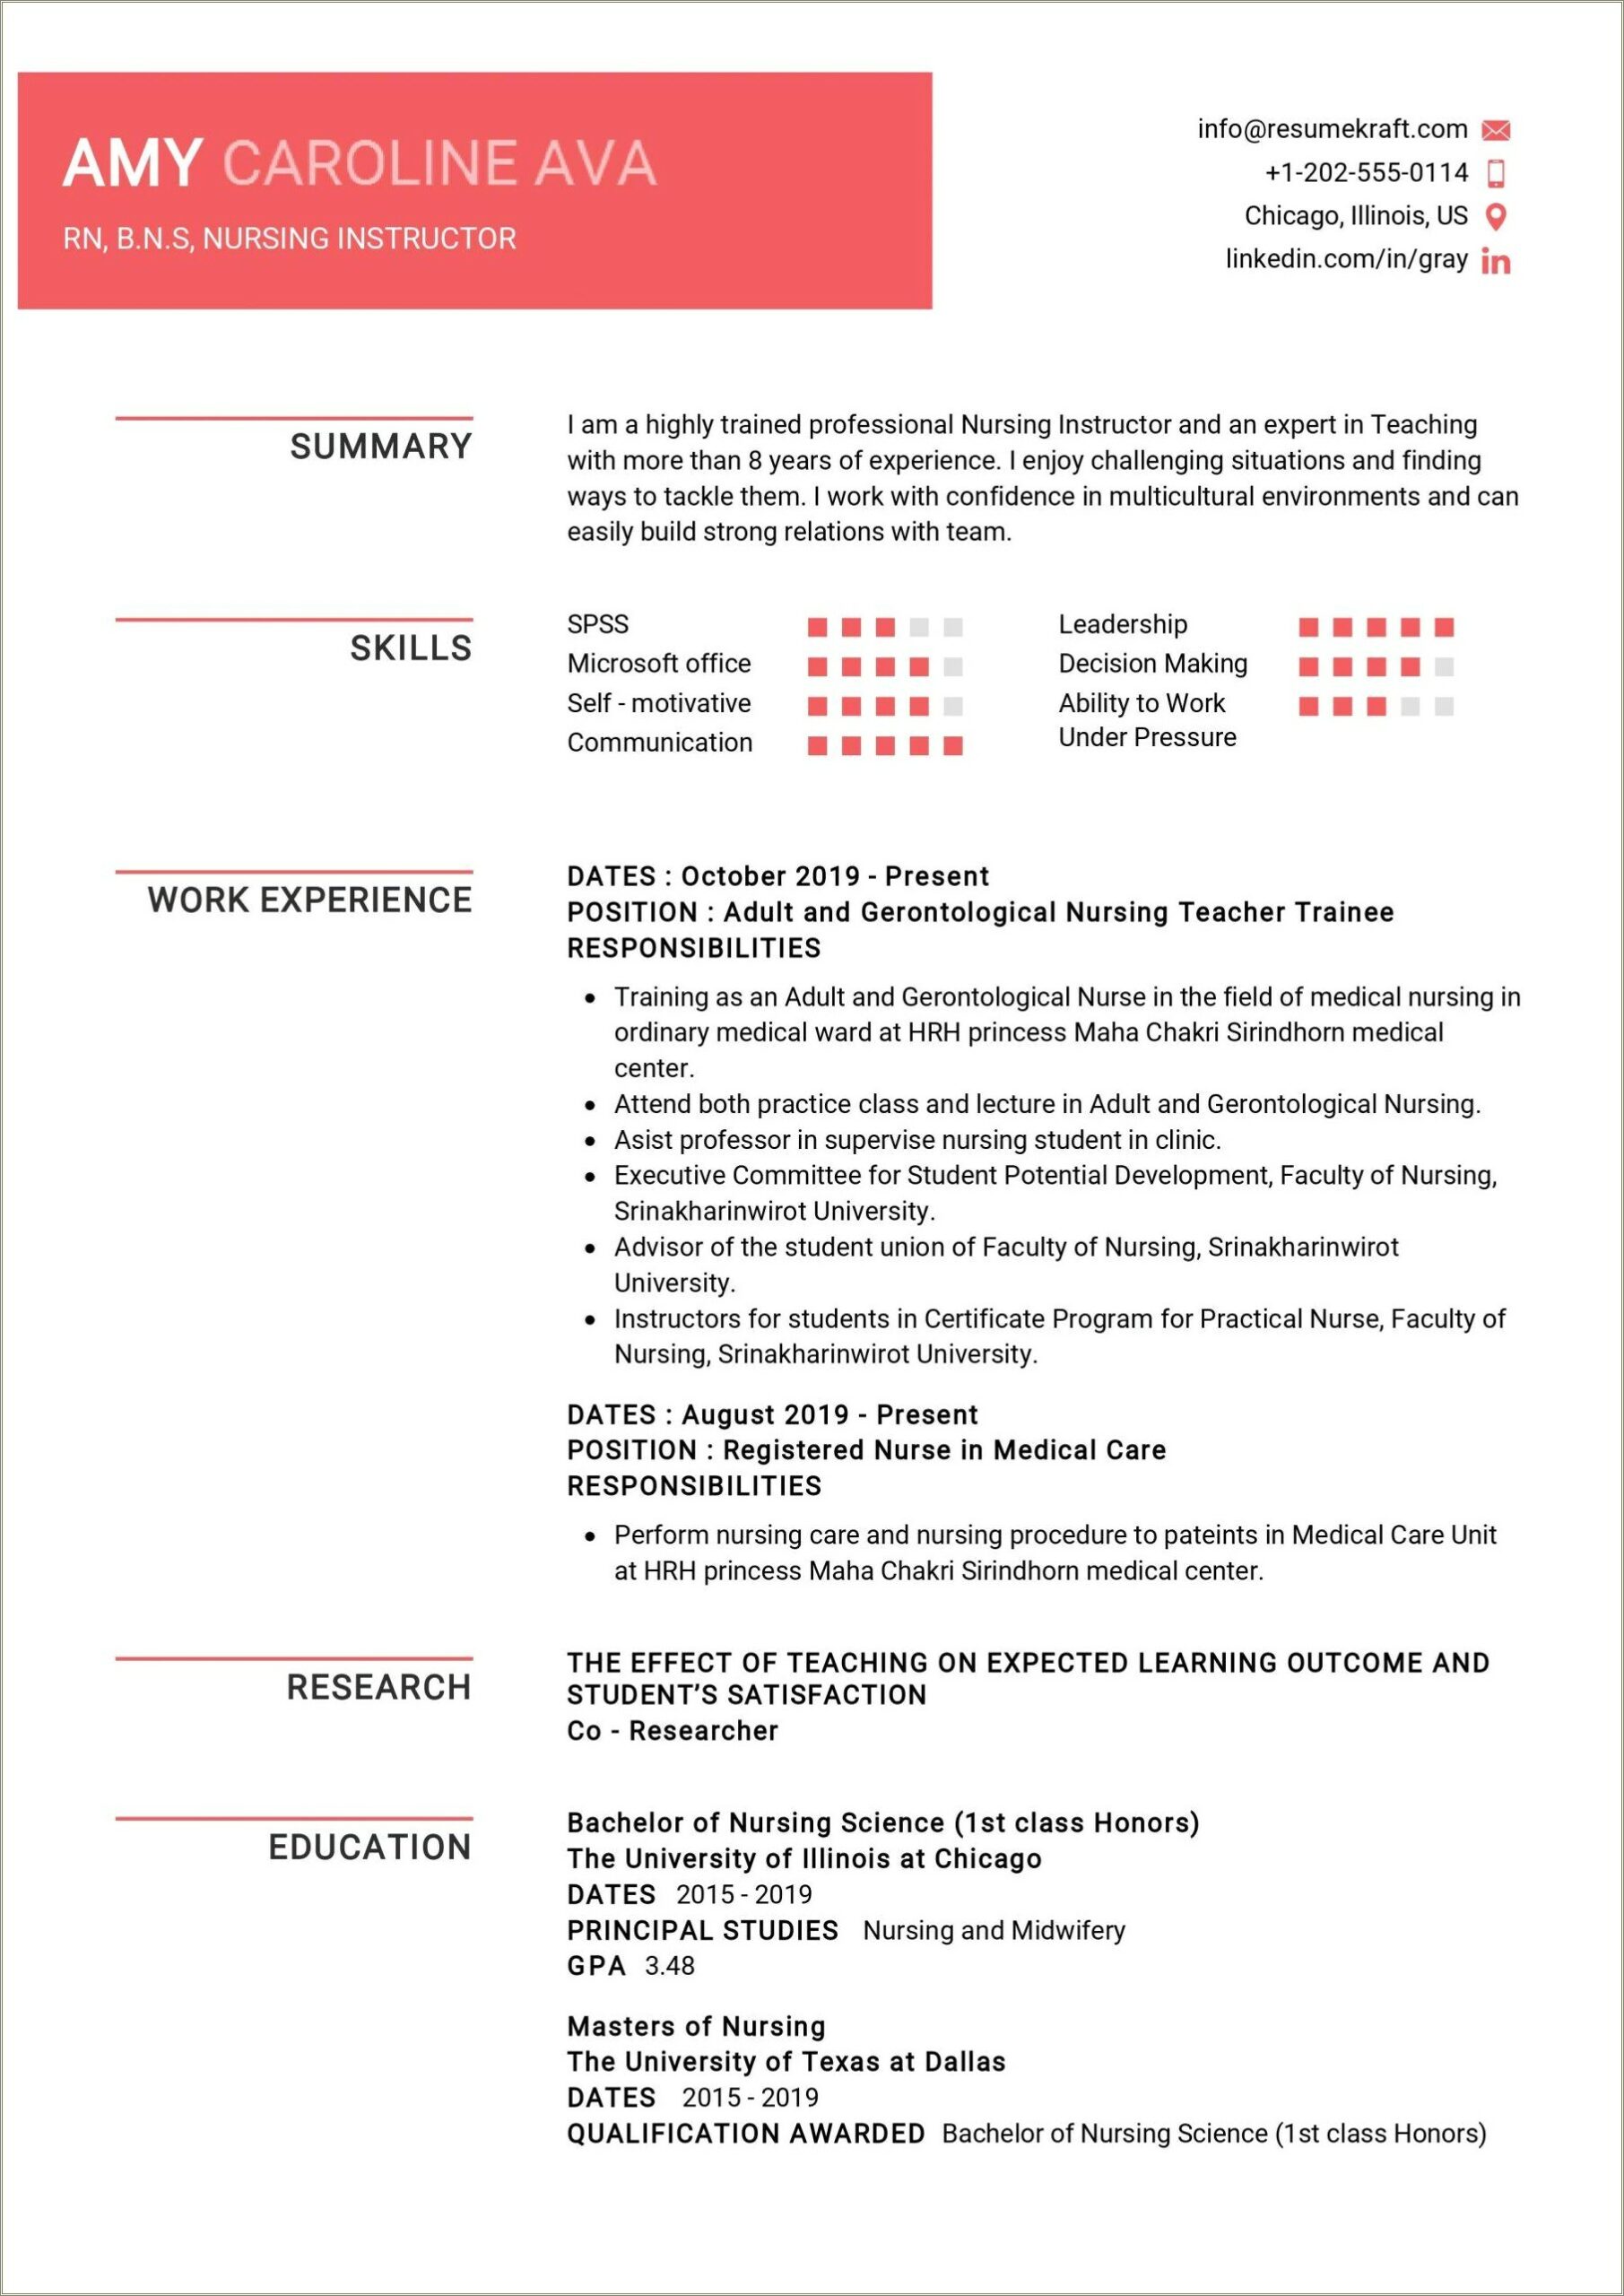 Sample Resume Of Staff Nurse With Job Description